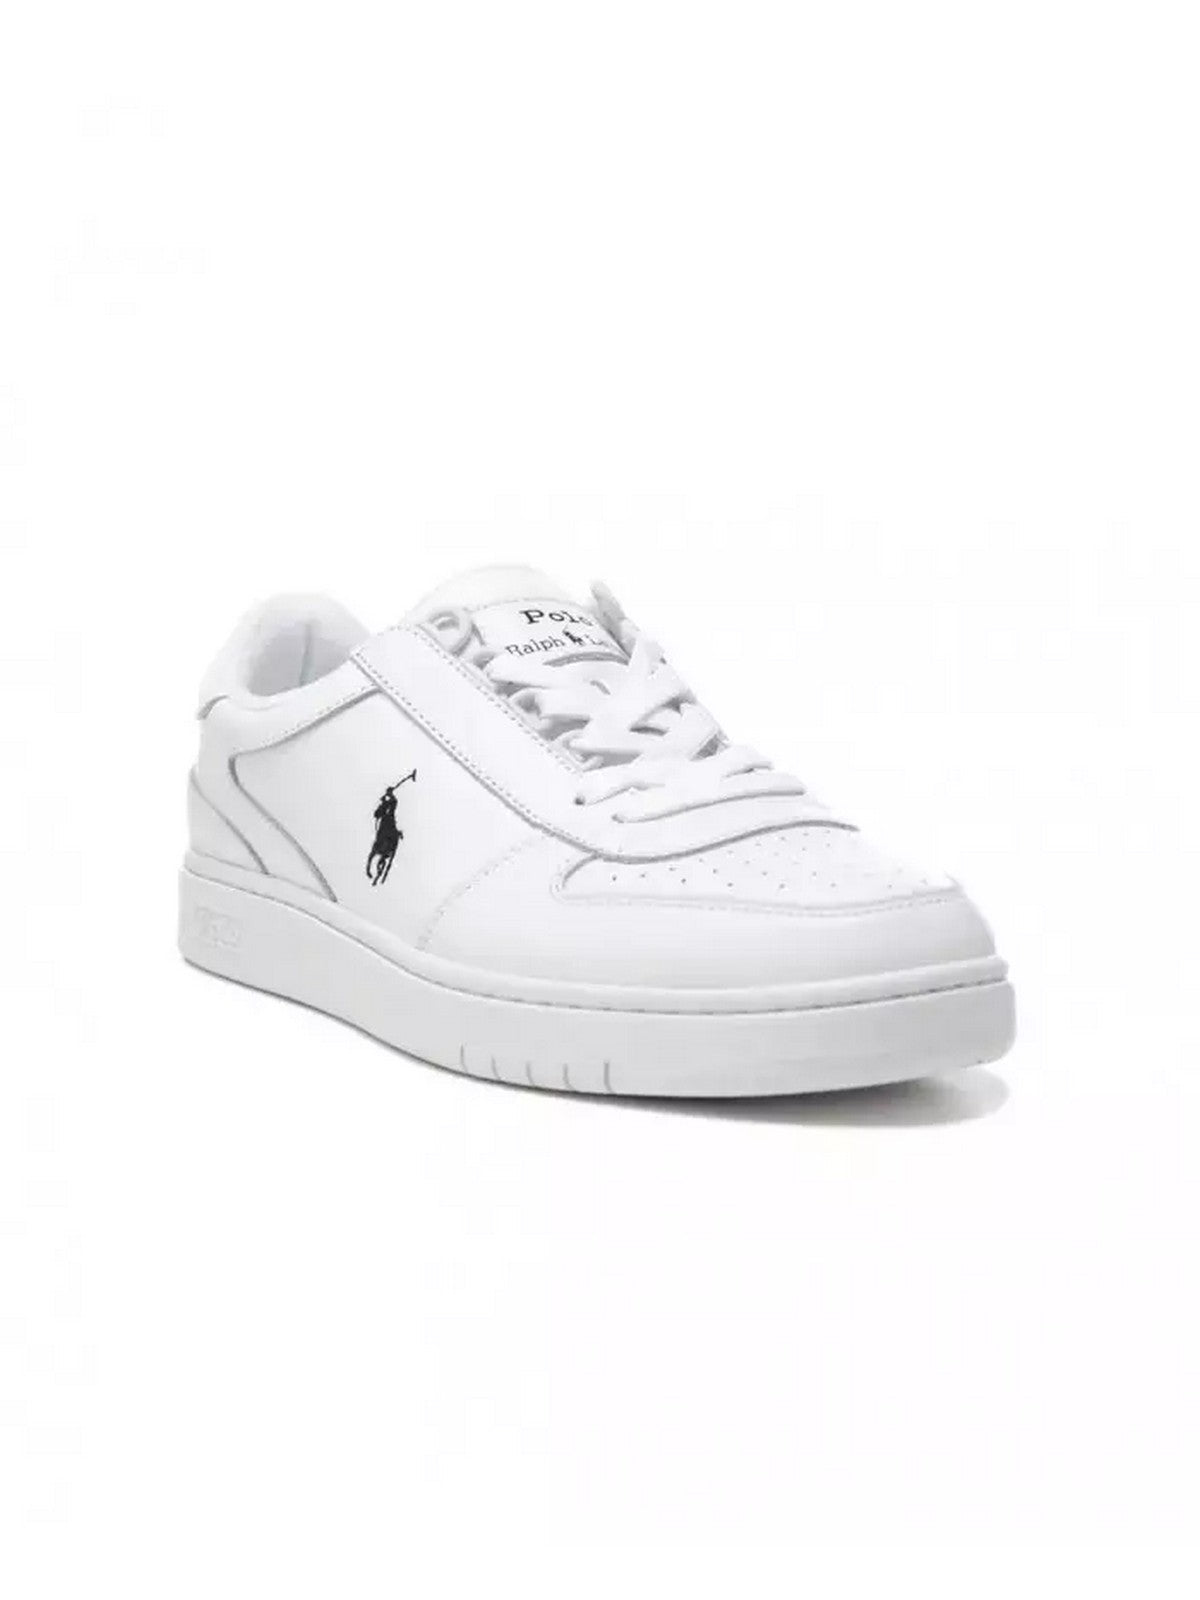 POLO RALPH LAUREN Sneaker Uomo  809885817 002 Bianco